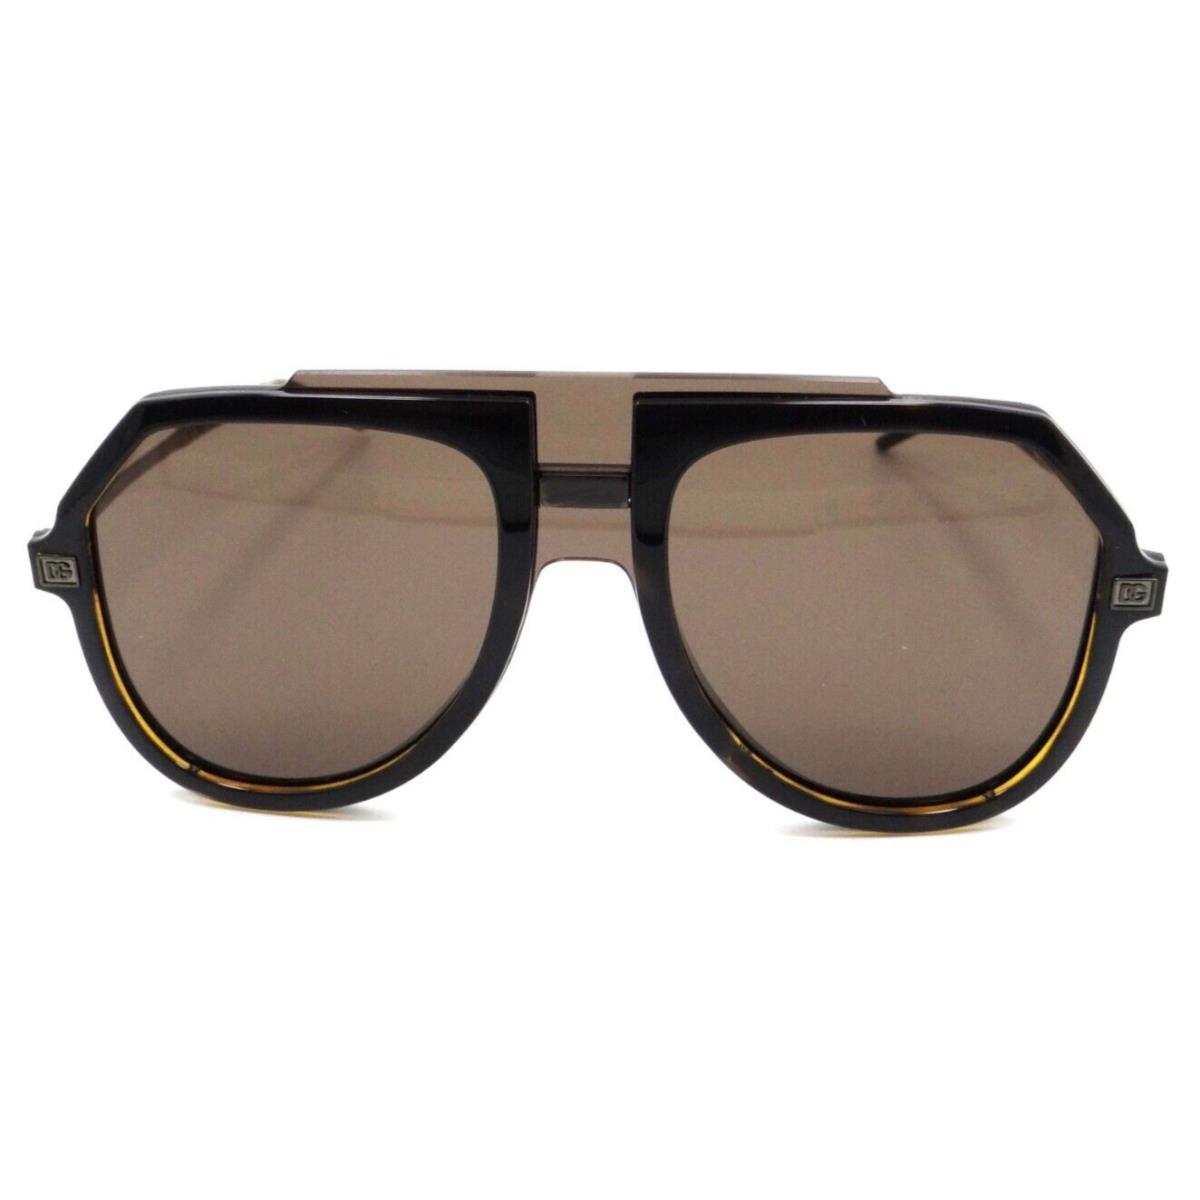 Dolce Gabbana Sunglasses DG 6195 502/73 45-xx-145 Havana / Dark Brown Italy